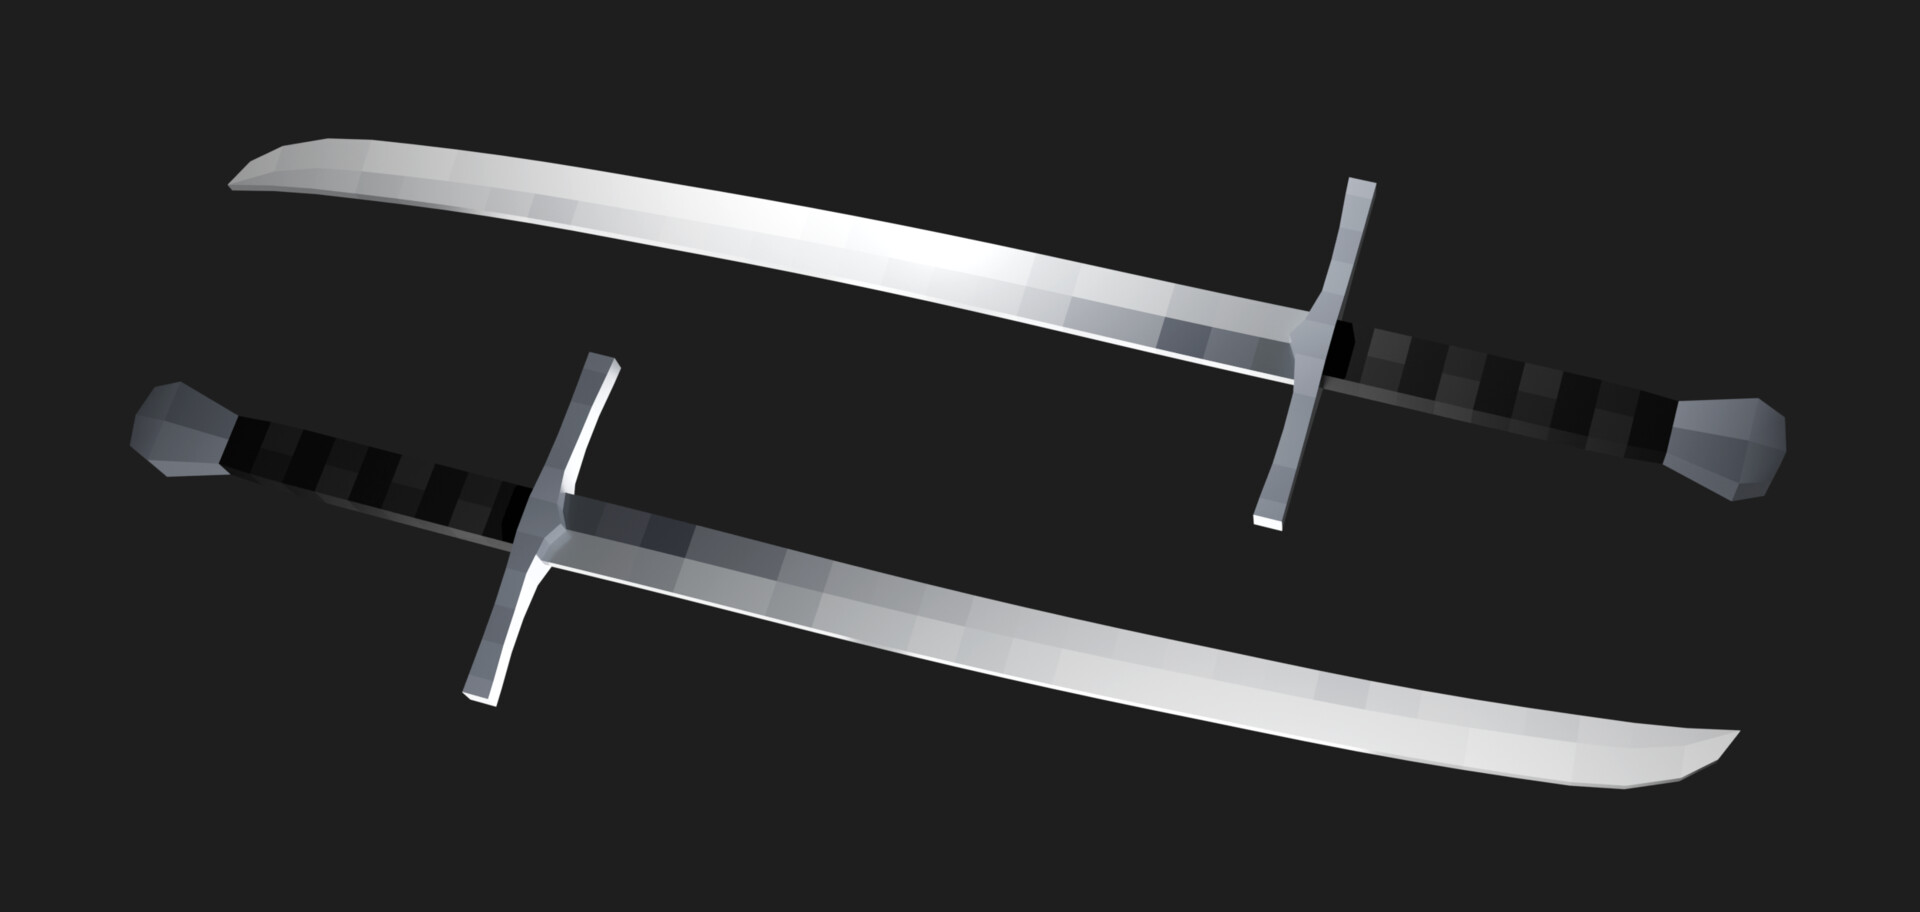 ⚔️ Crossed swords